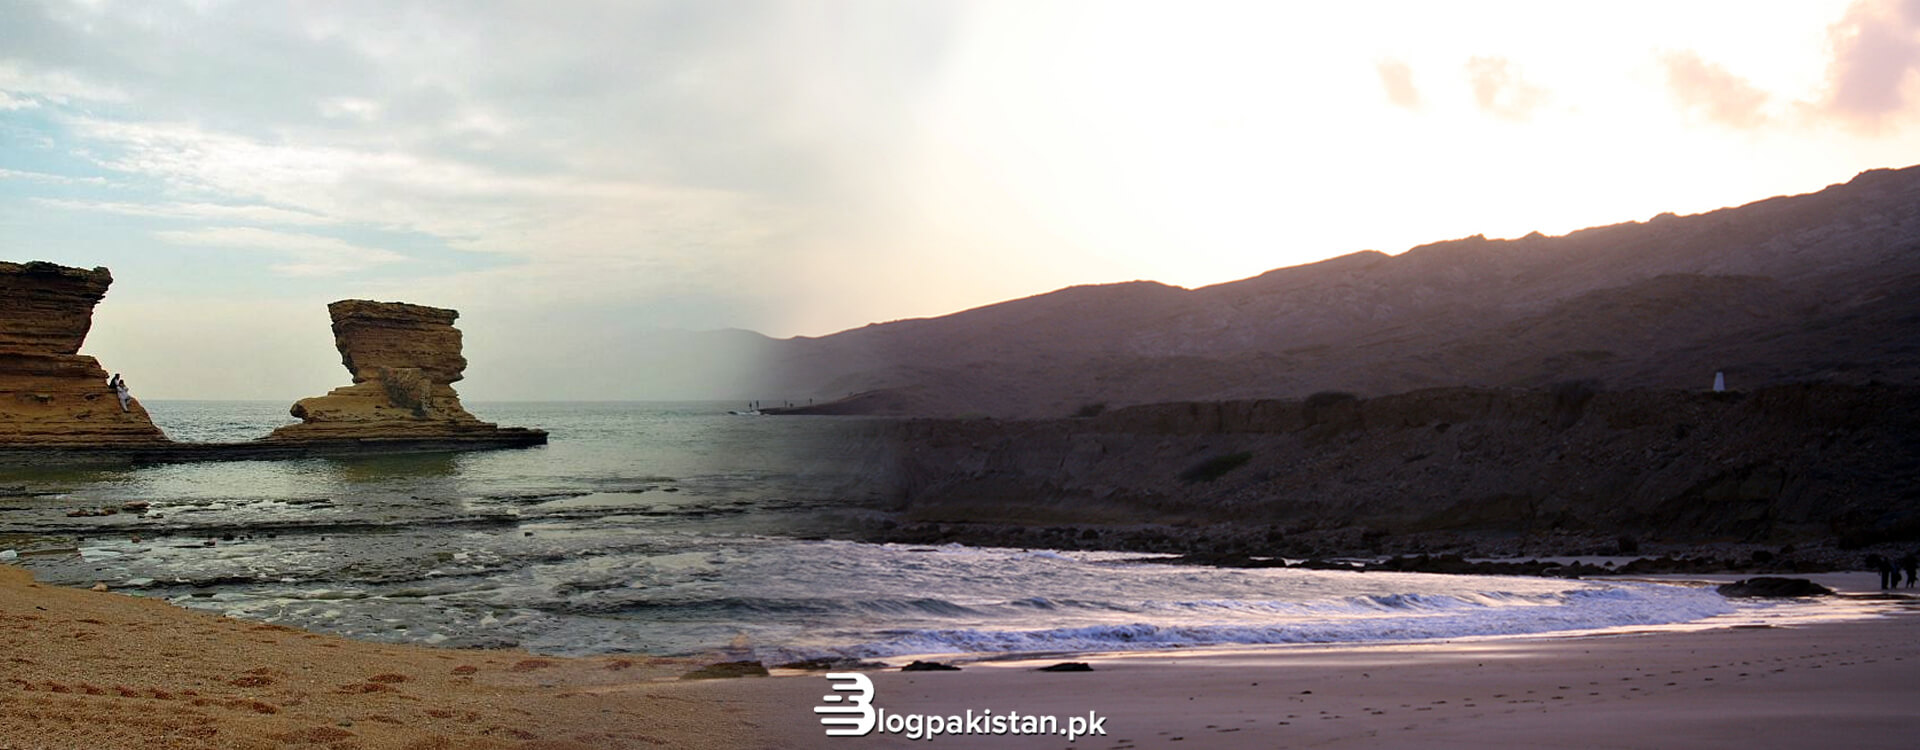 best beaches in pakistan